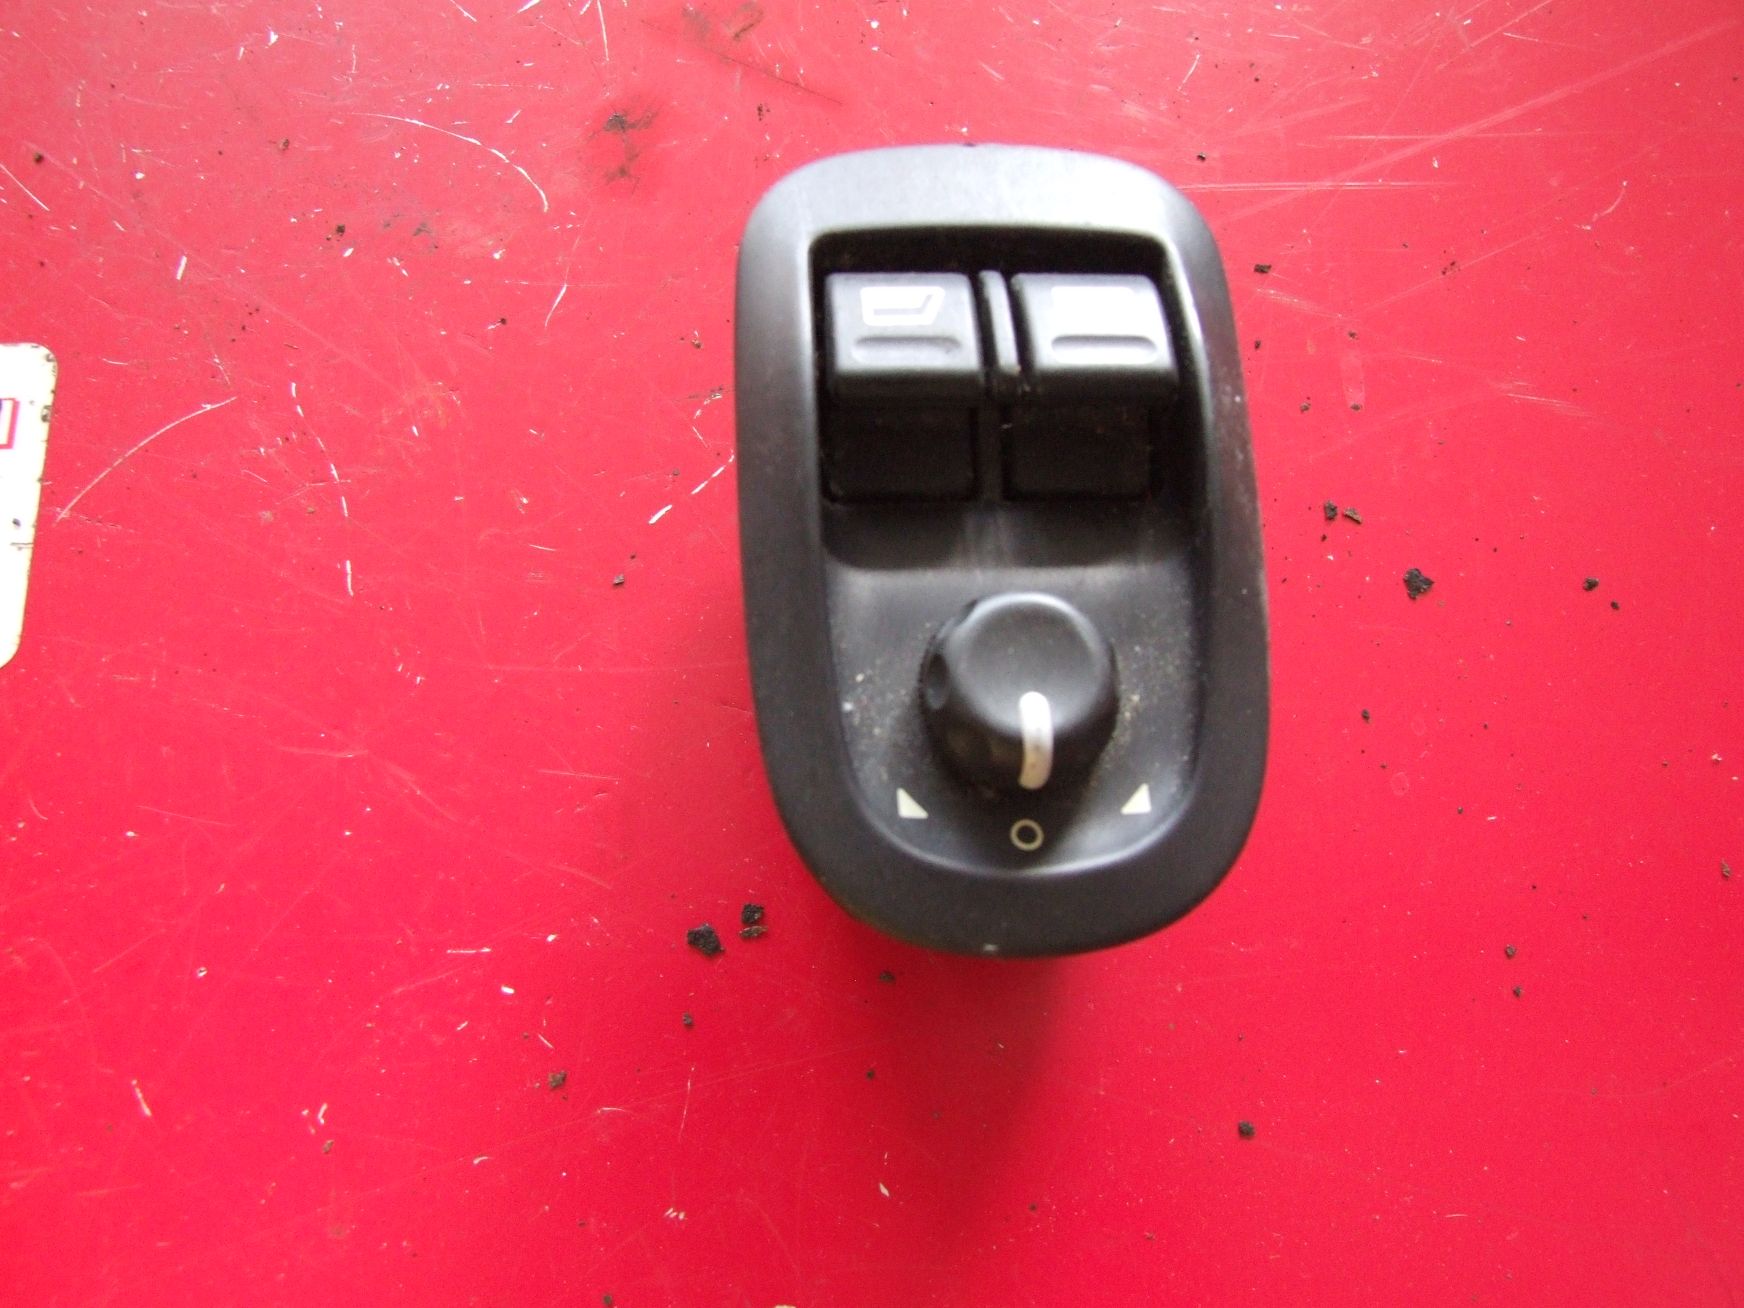 Schalter Fensterheber aus Peugeot 306 Kombi (gebraucht)